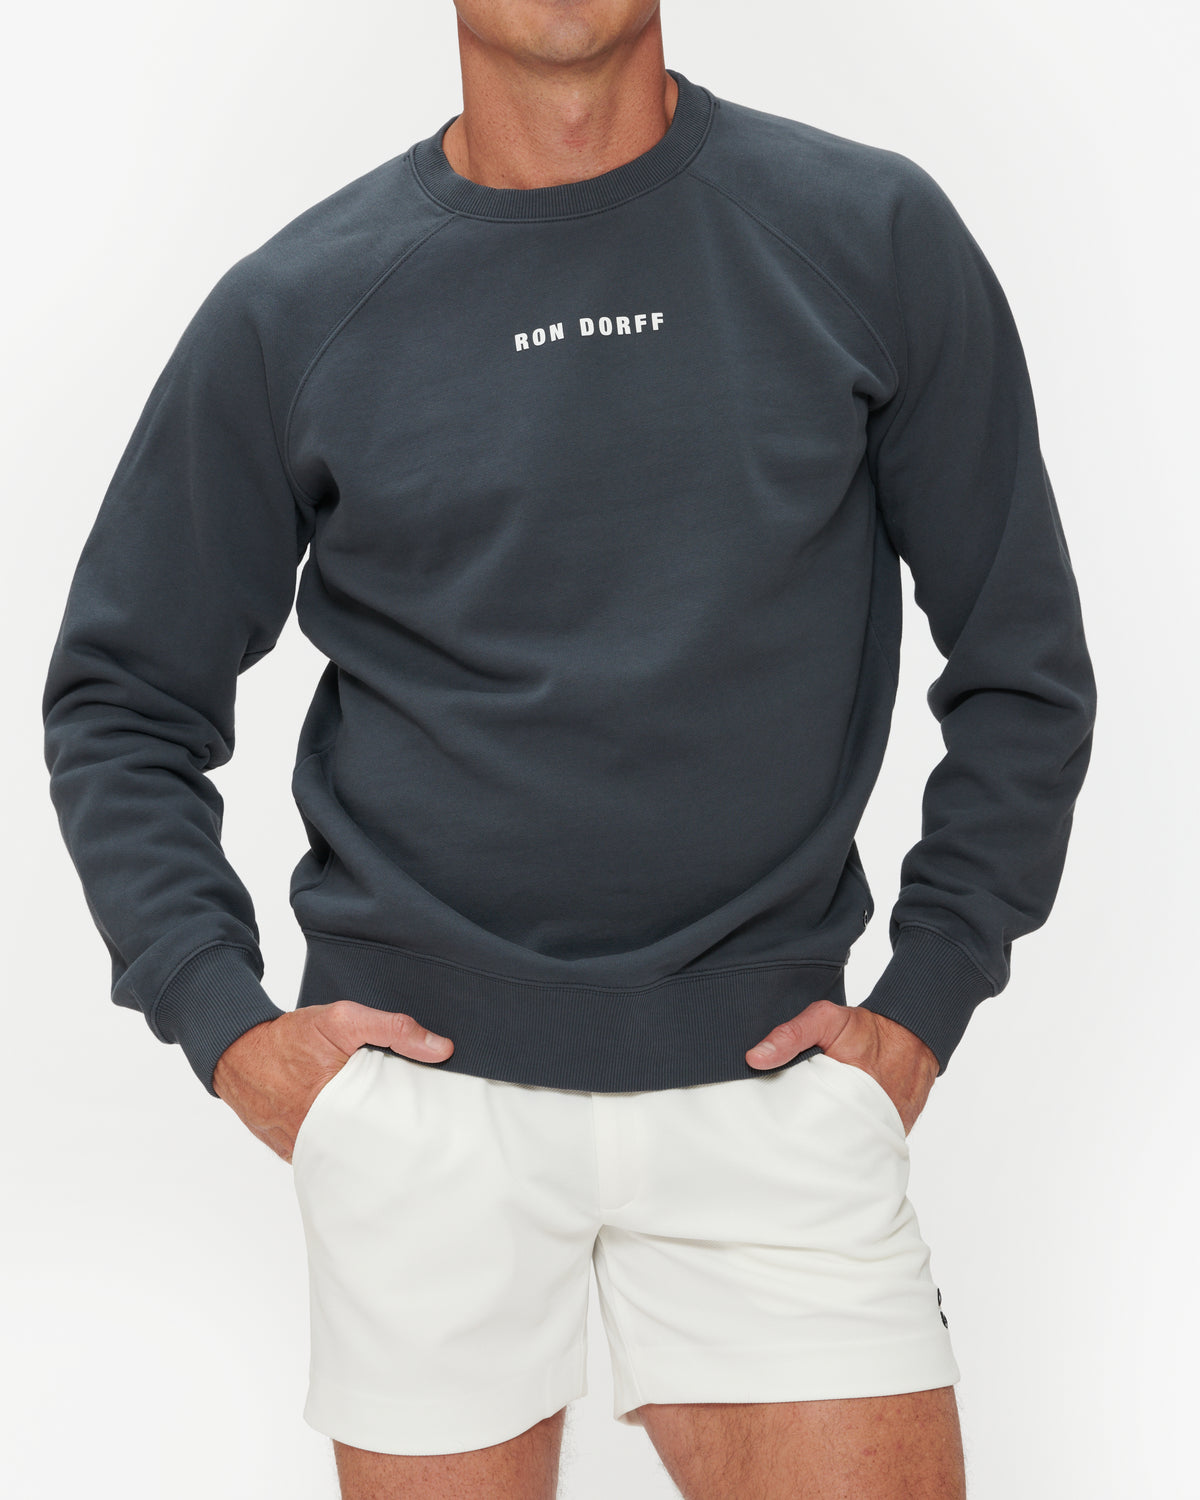 Ron Dorff Organic Cotton Sweatshirt – The Shop at Equinox